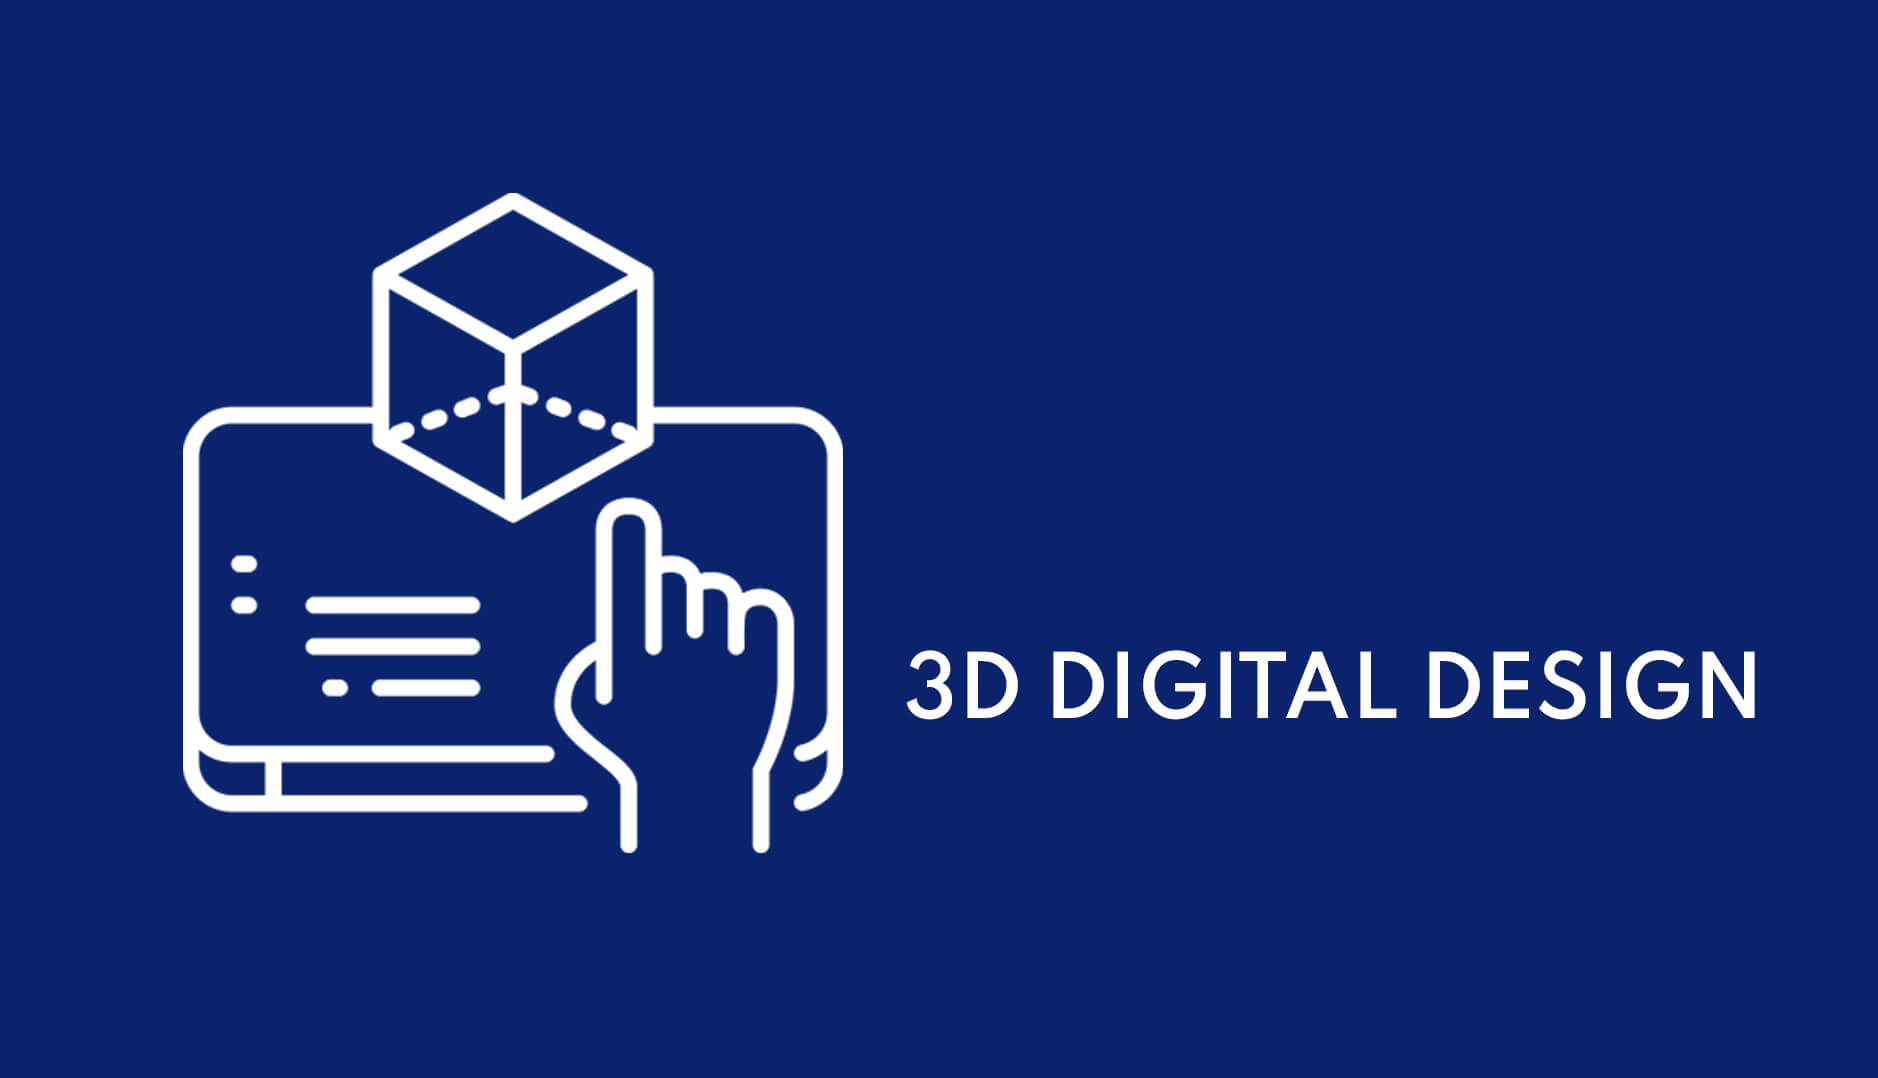 3D Digital Design